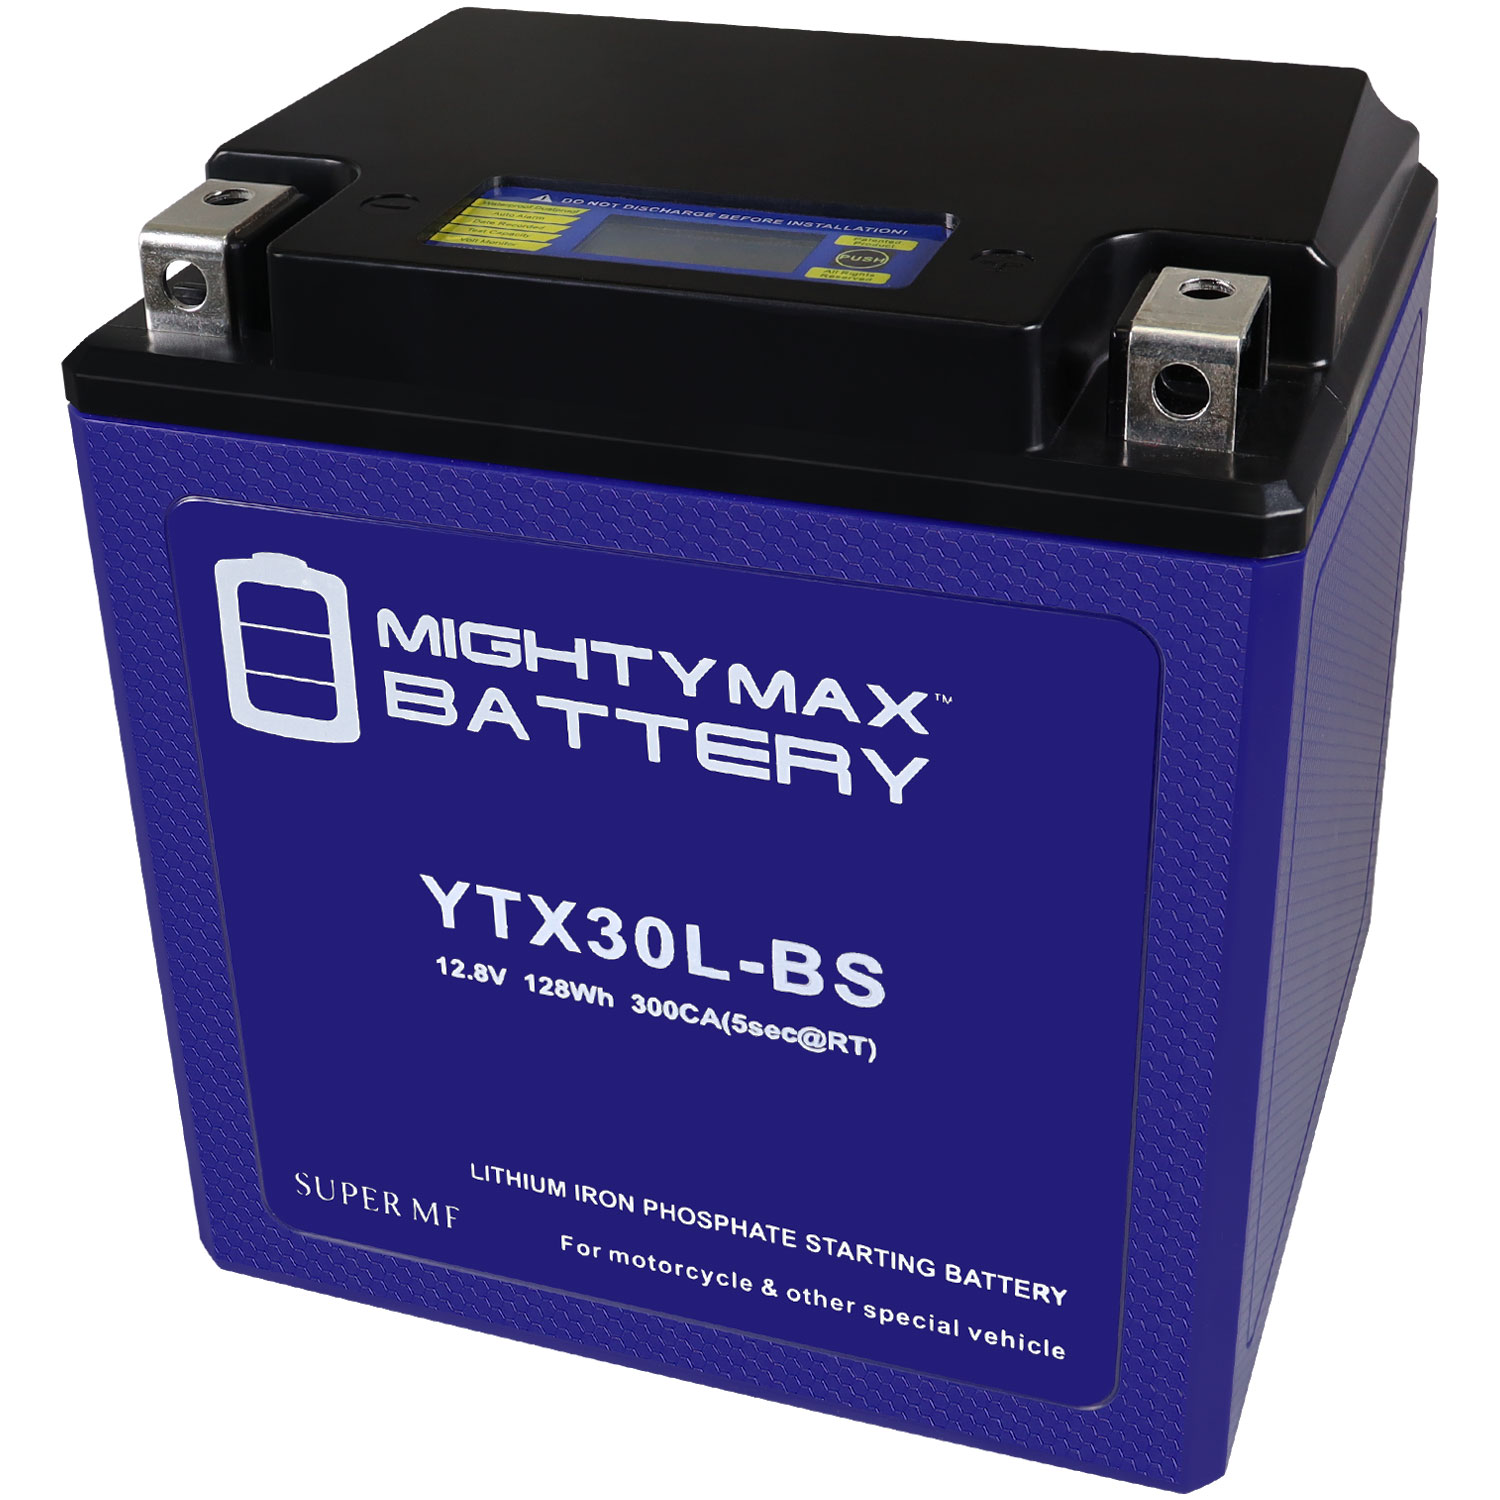 Audio System LiFePO-Batterie (12,8V, 3,3Ah, 300Ampere) BASS